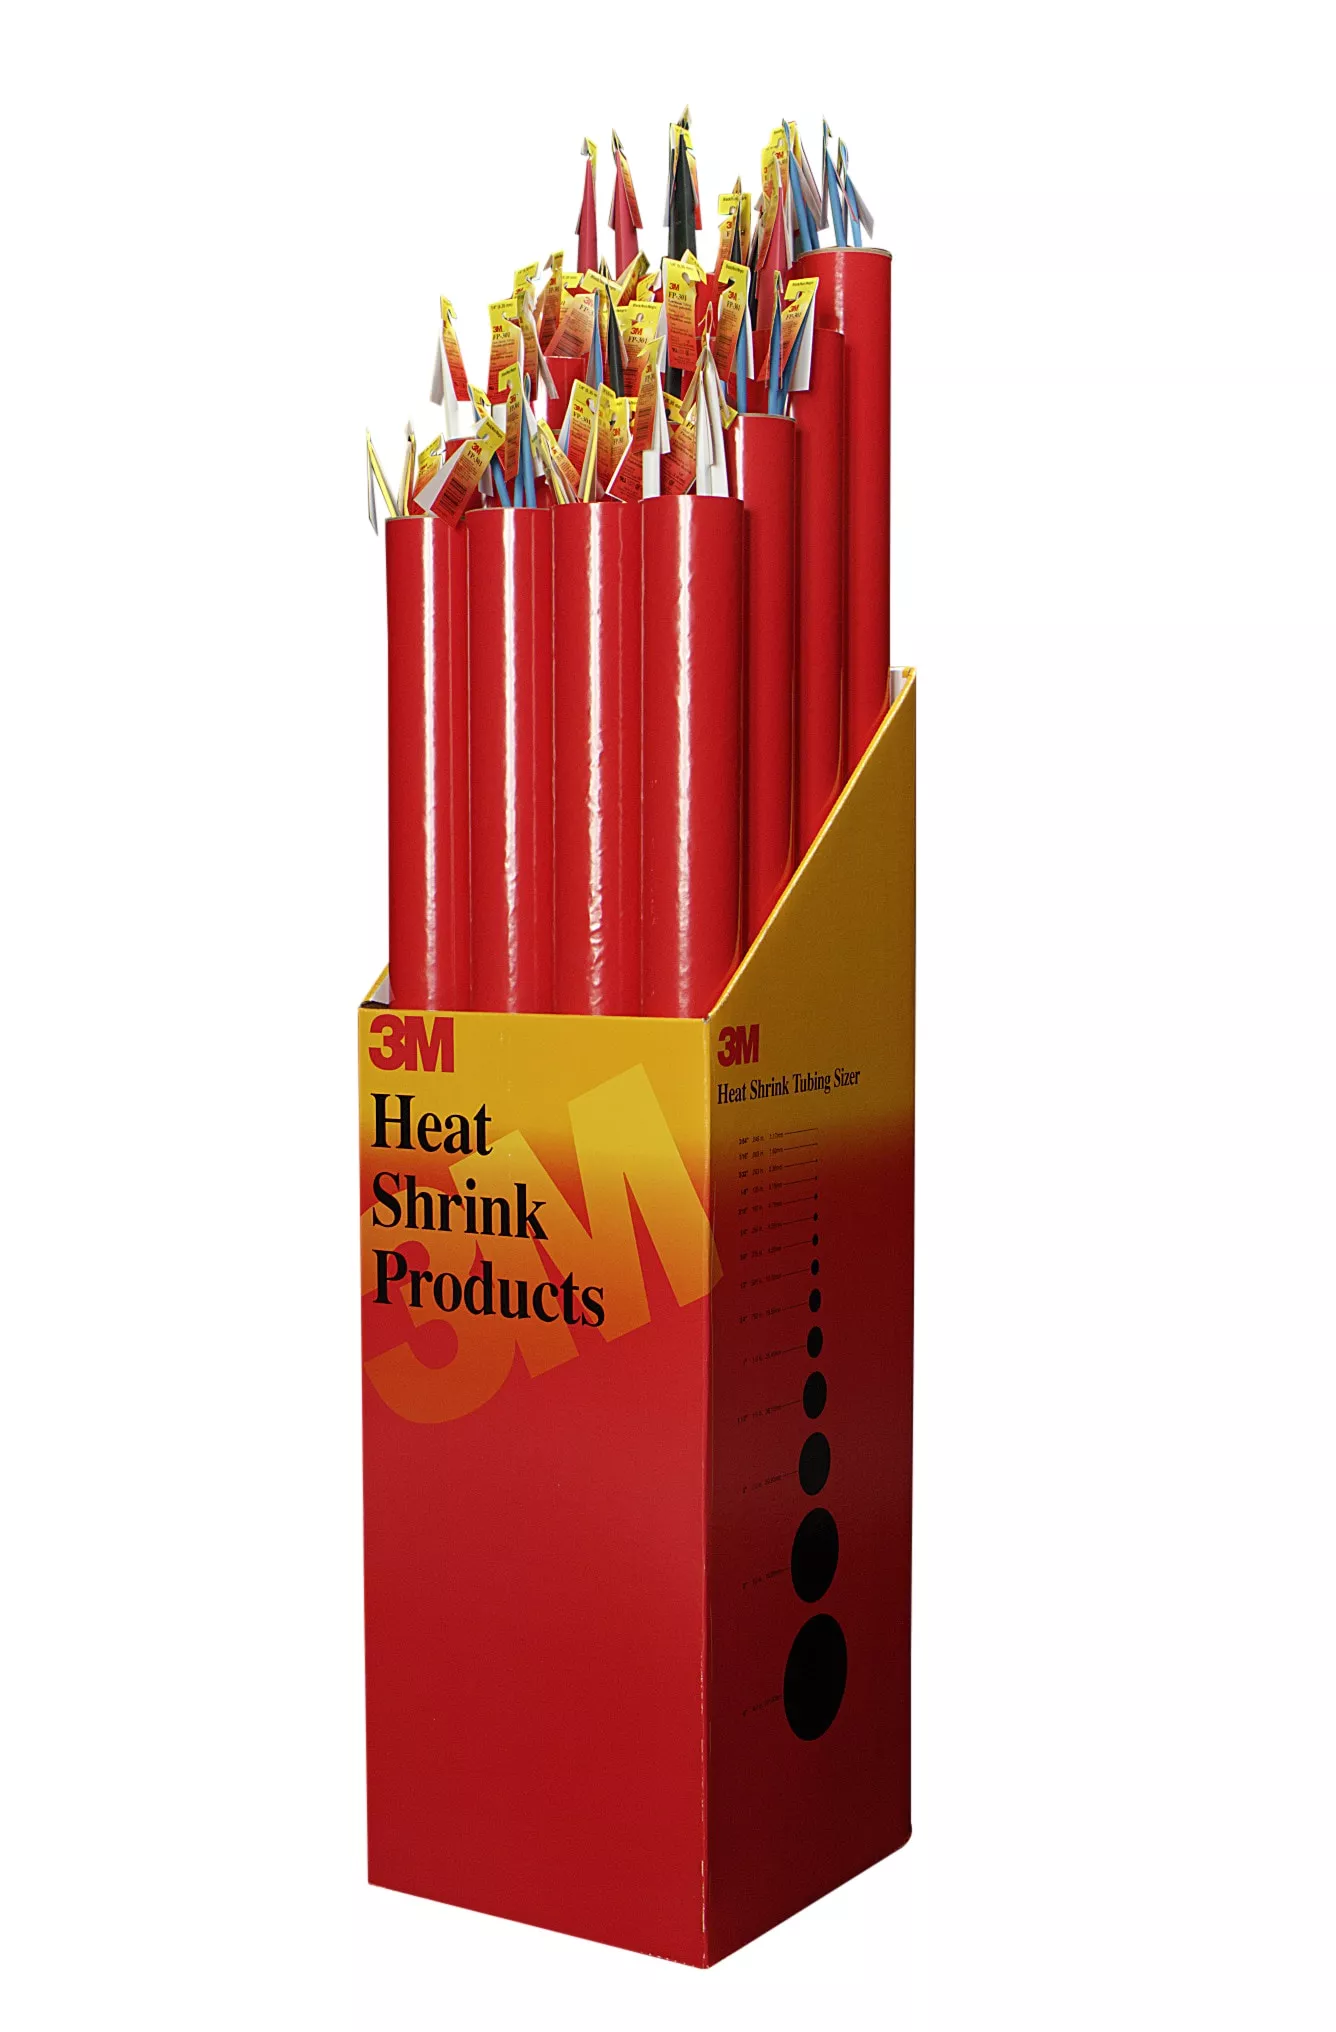 SKU 7010400853 | 3M™ Modified Polyvinylidene Flouride Heat Shrink Tubing
MFP-3/32-48-Clear-Bulk: 4 ft length sticks